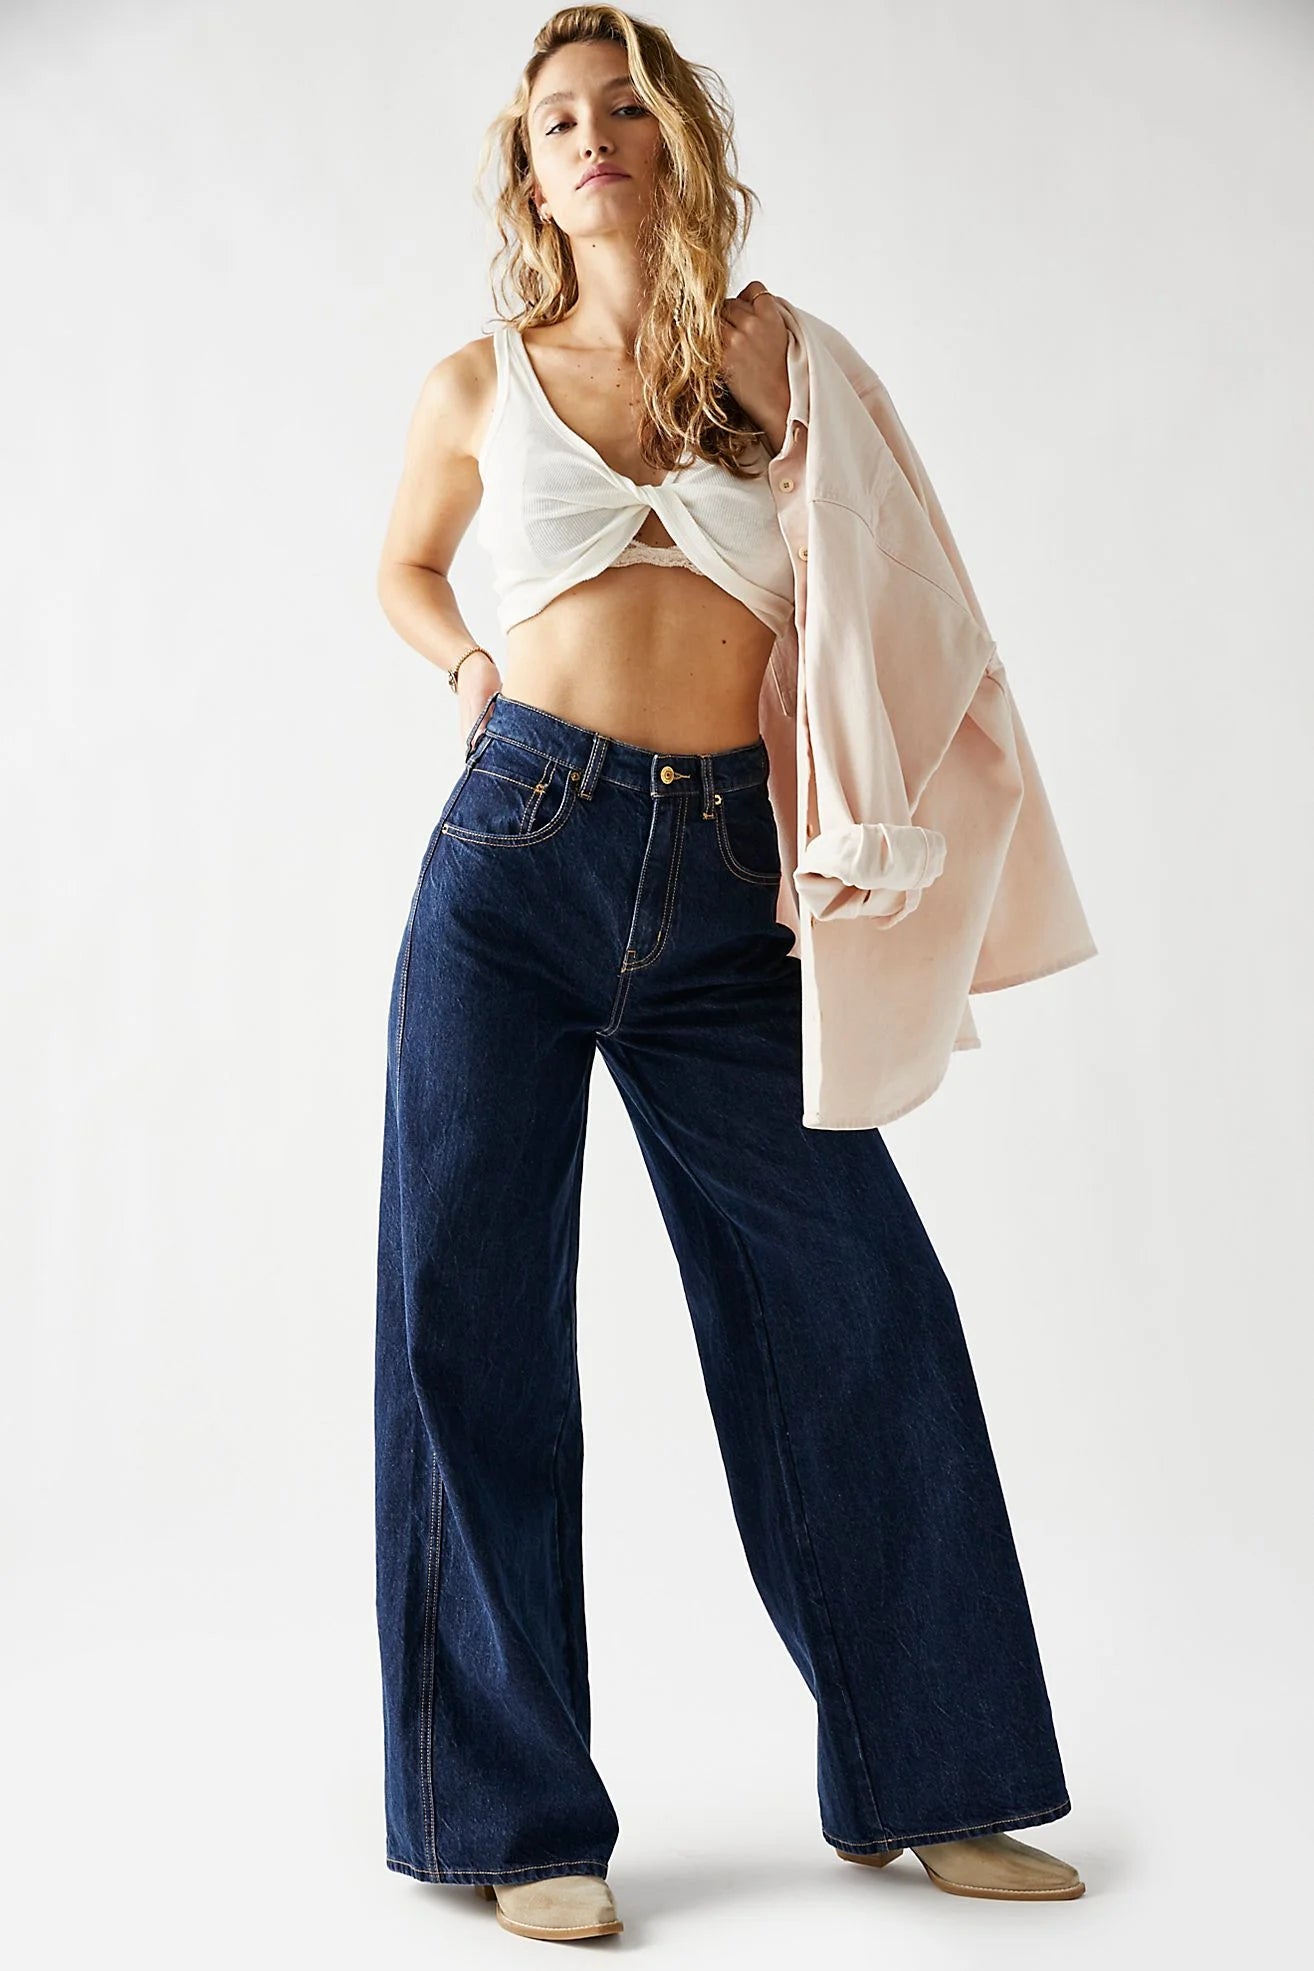 Elle Woods Off Duty | Styling a Blazer & Jean Shorts | Sunny Side Cecilia